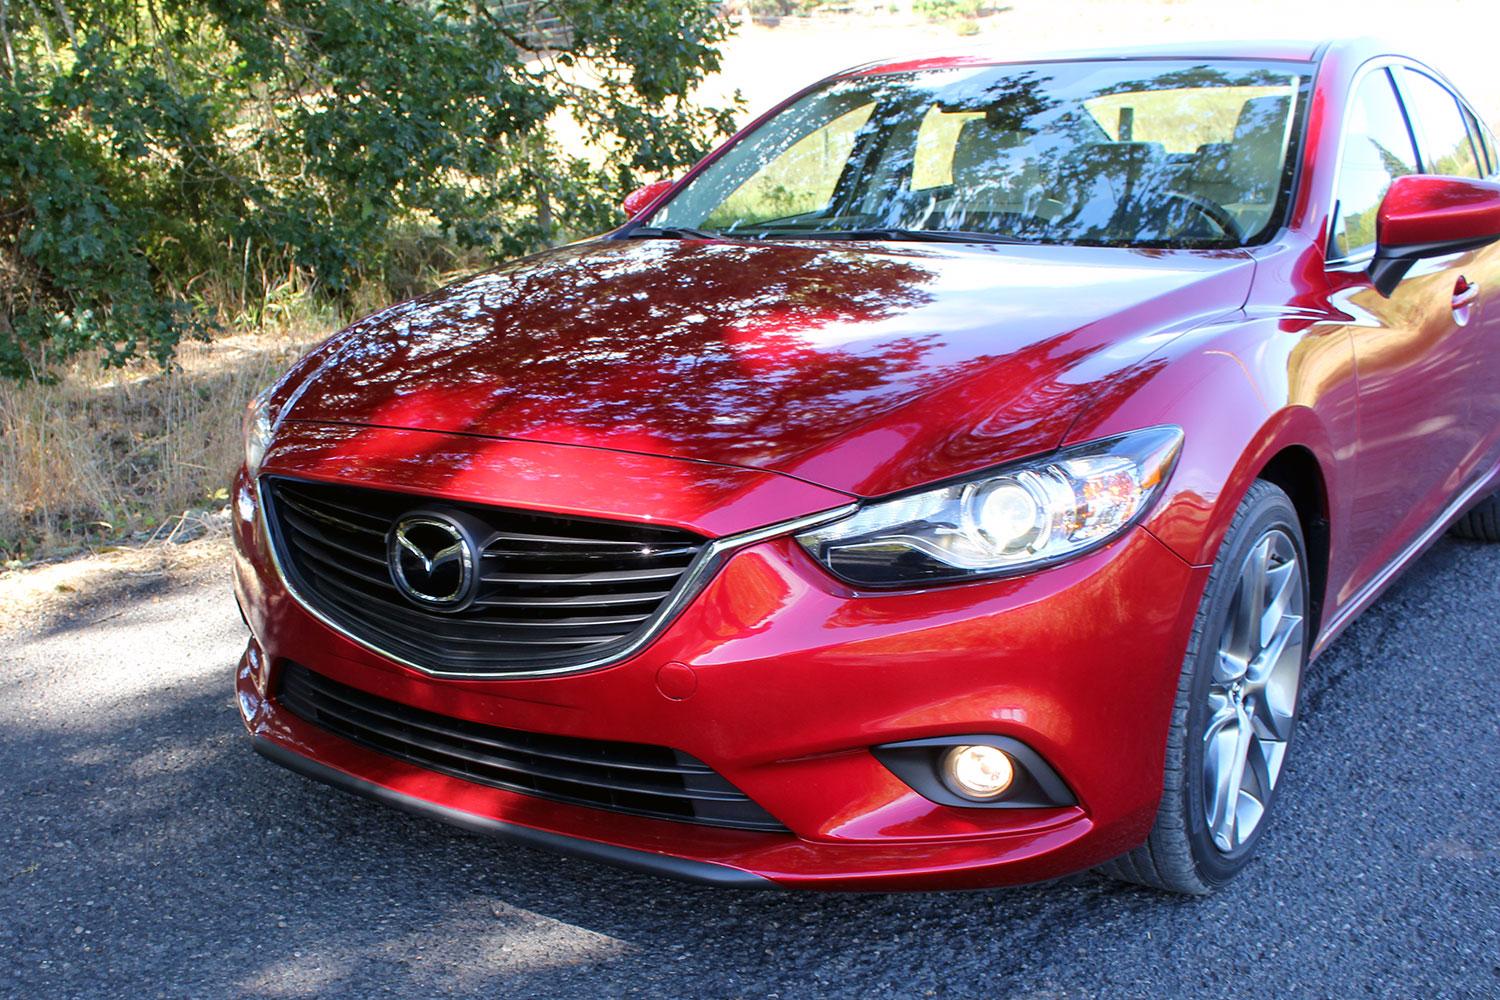 2015 Mazda Mazda 6 front section